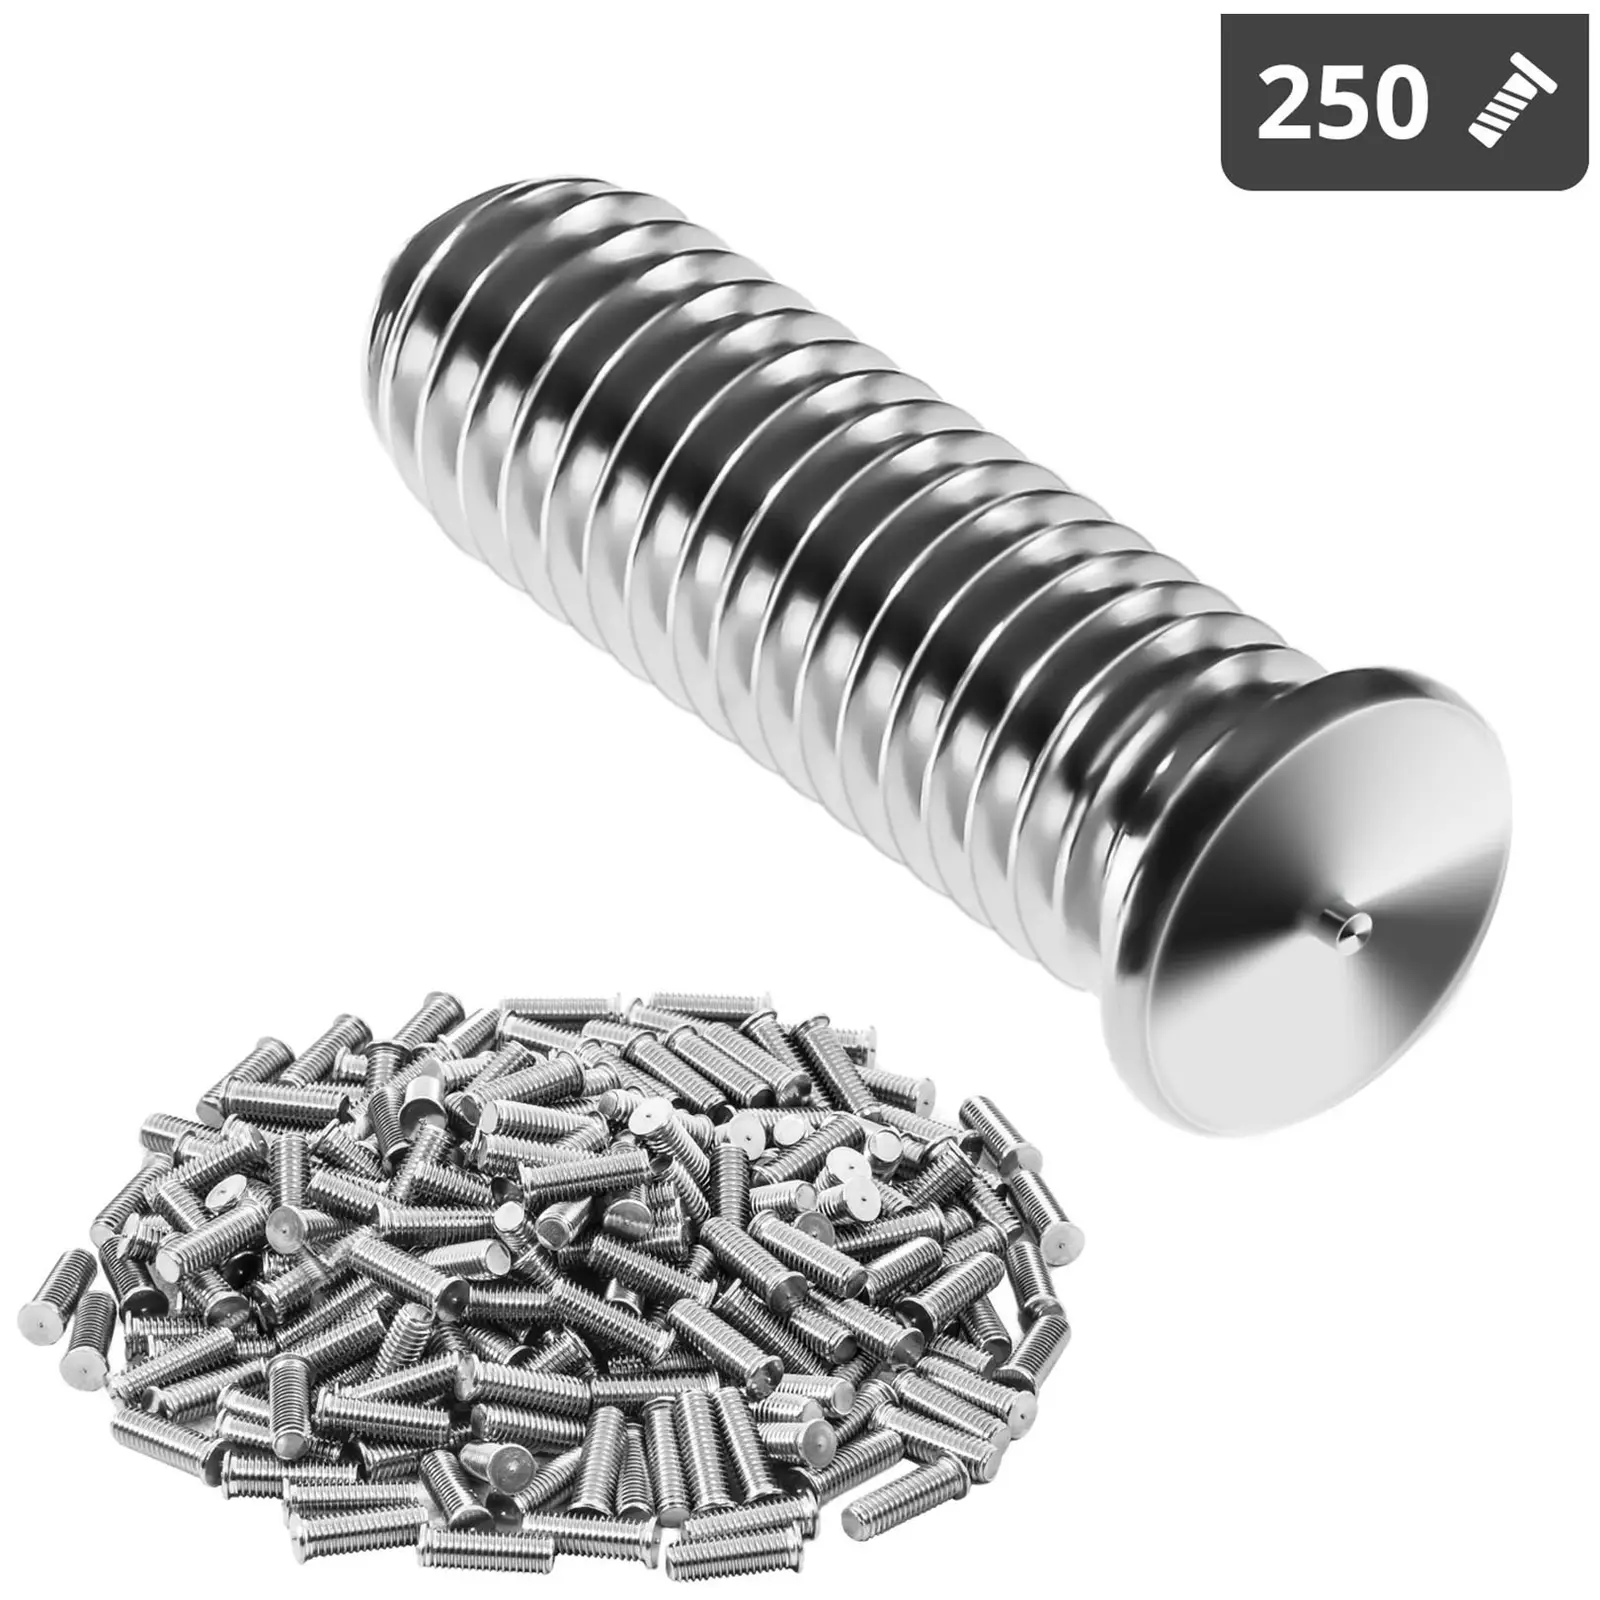 Stud Welder Set - M8 - 25mm - stainless steel - 250 pieces